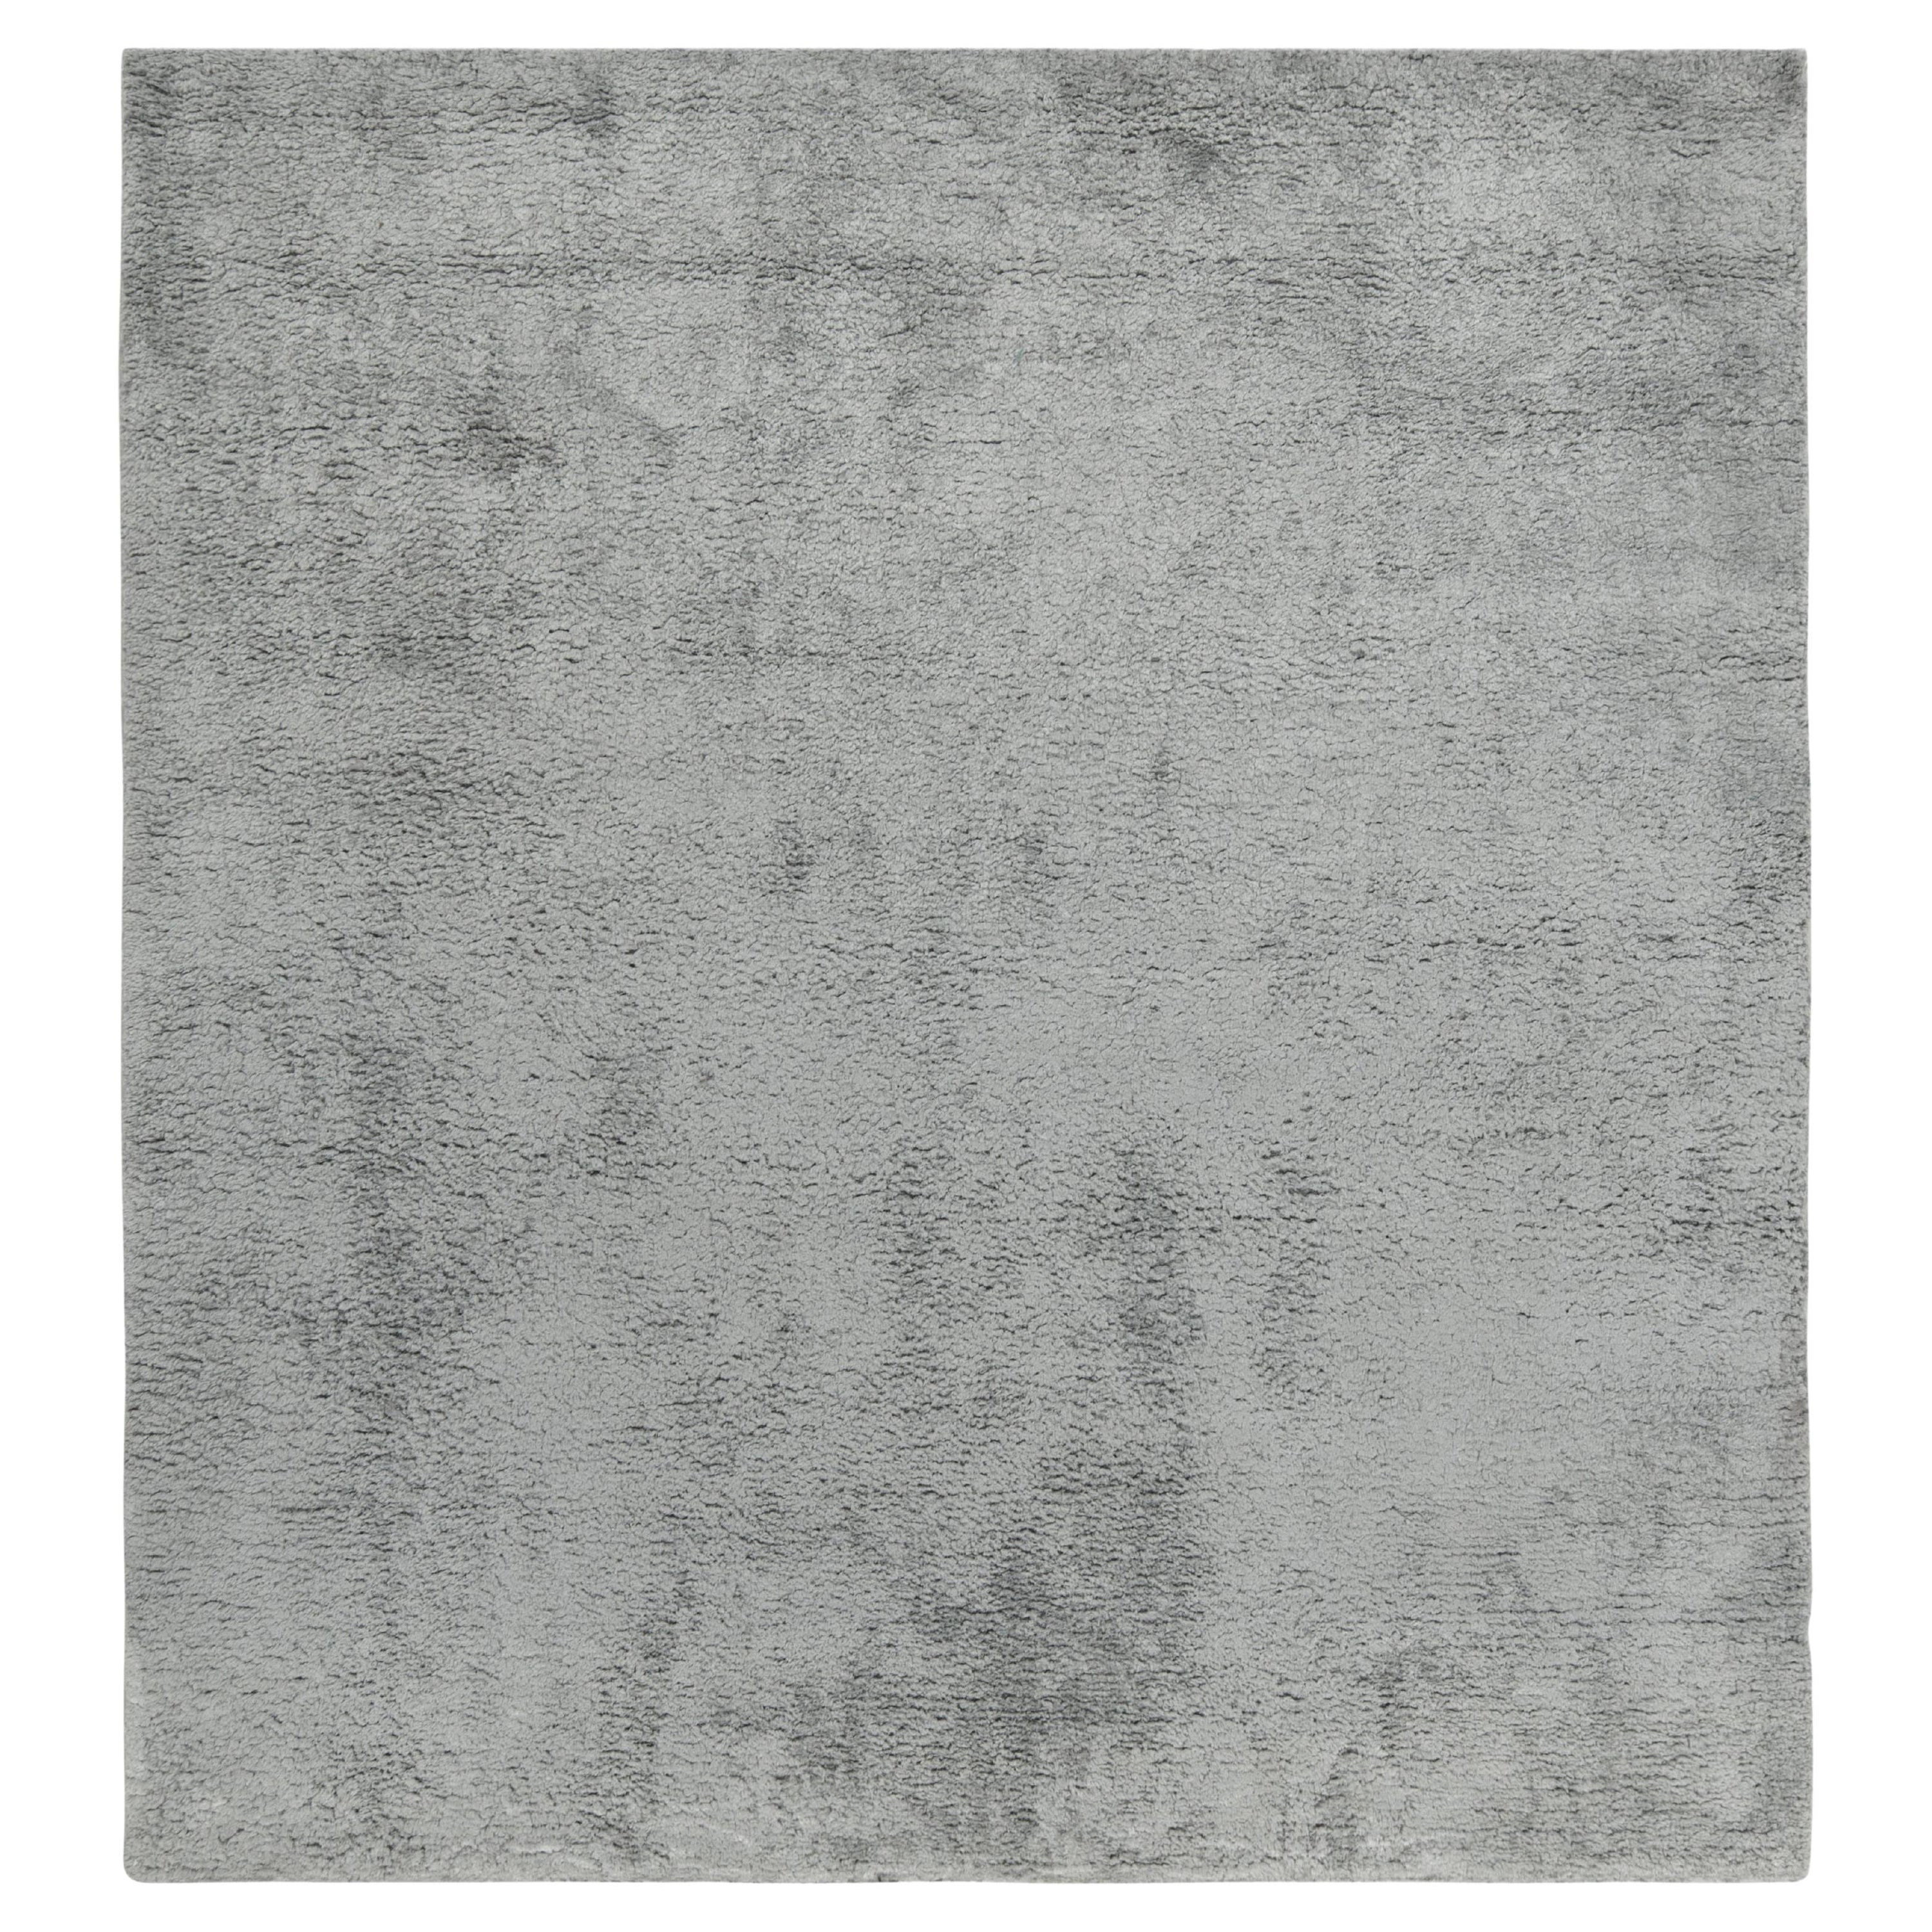 Rug & Kilim's Contemporary Teppich in massivem Grau, Hochflor